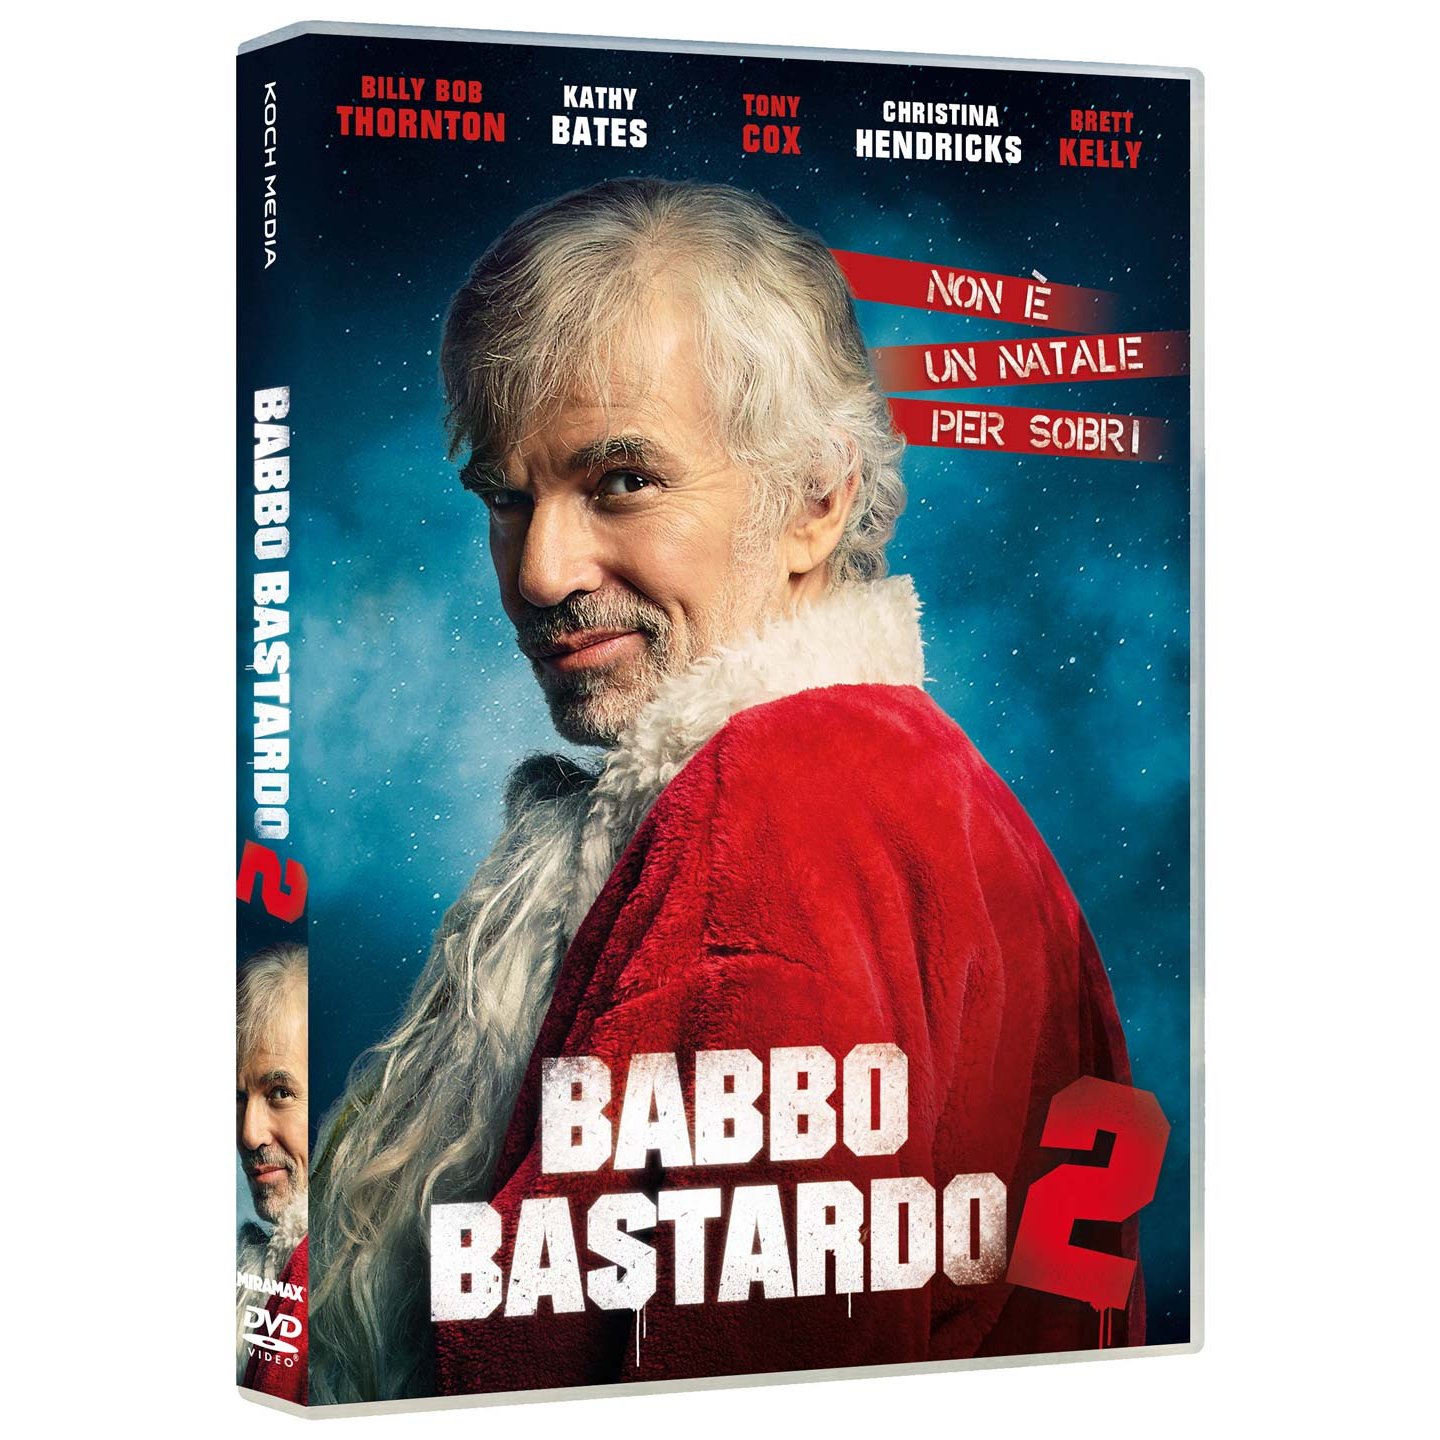 BABBO BASTARDO 2